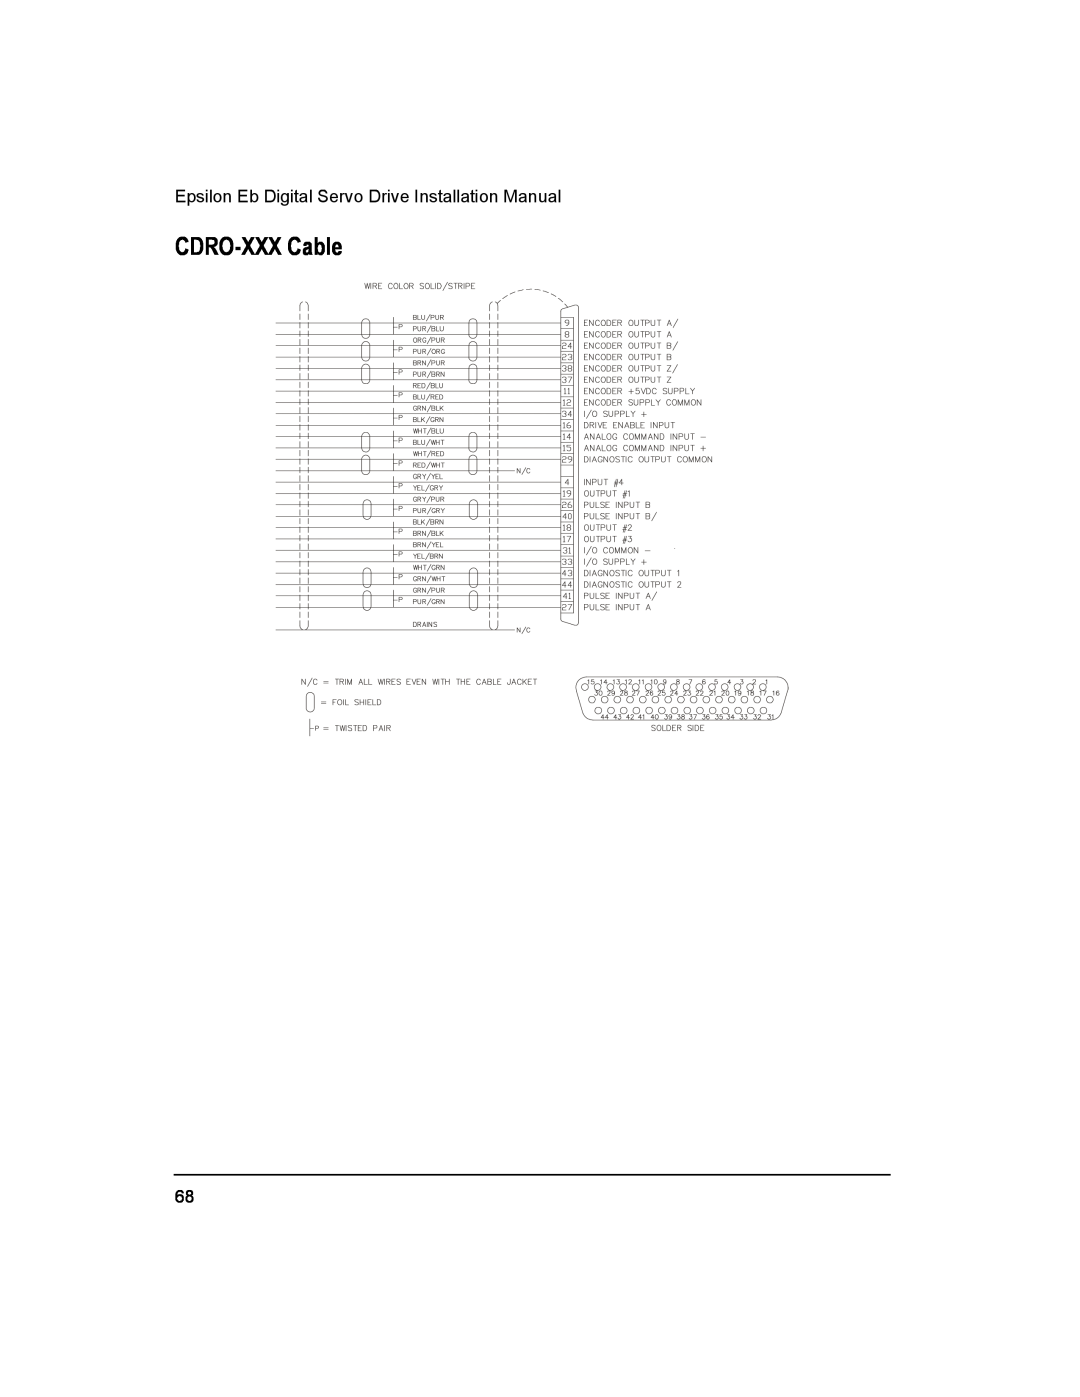 Emerson 400501-05 installation manual CDRO-XXX Cable, Epsilon Eb Digital Servo Drive Installation Manual 